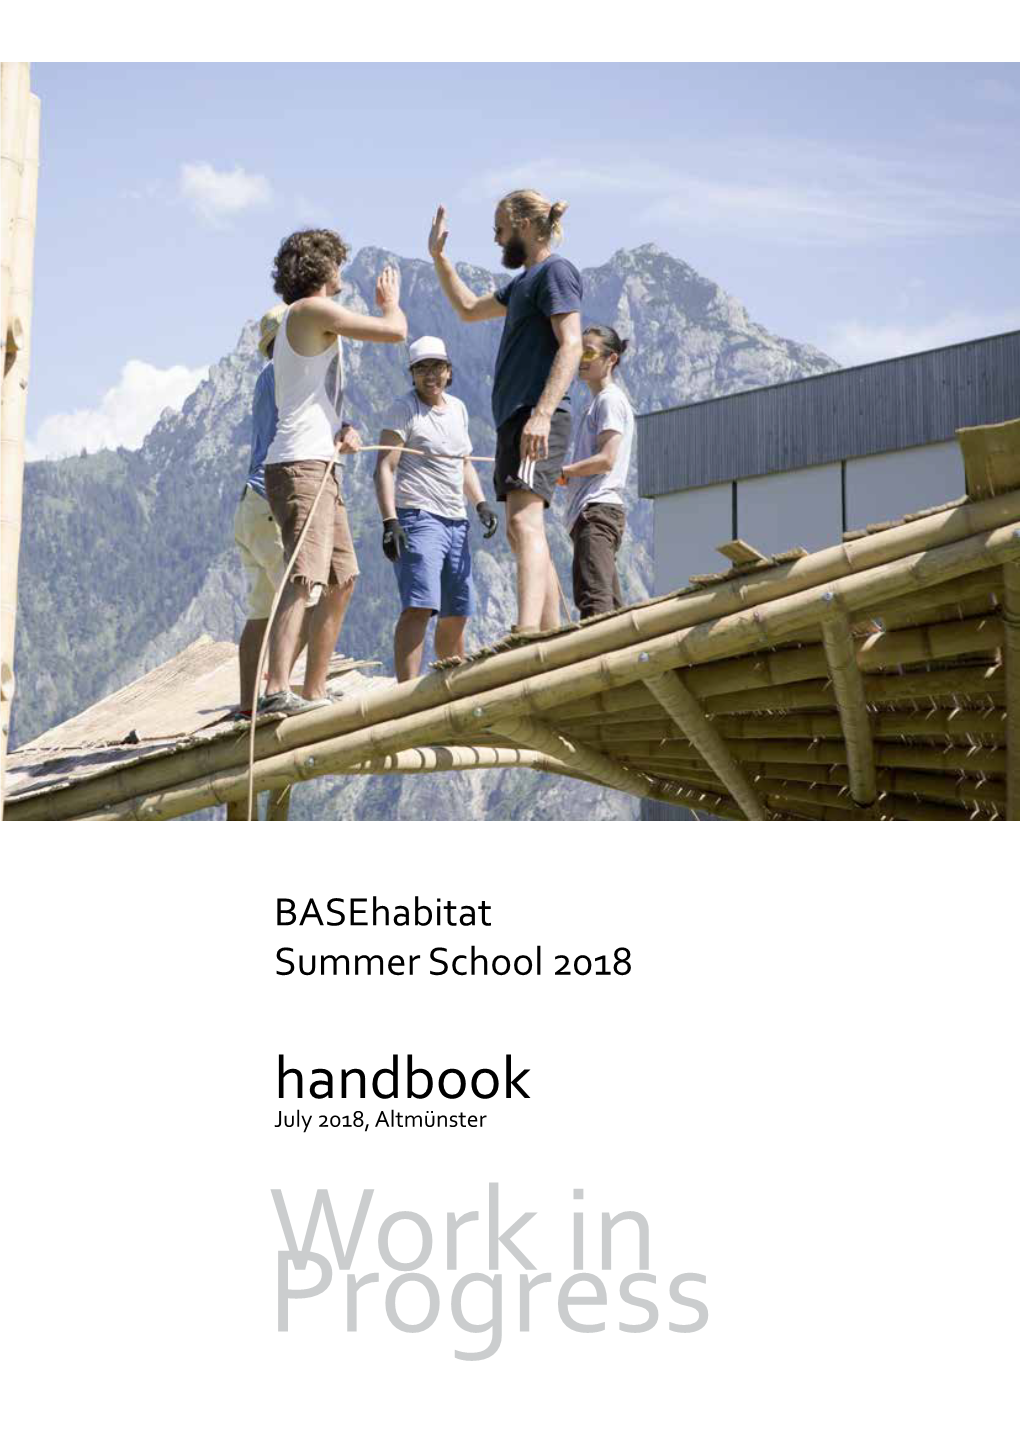 Handbook July 2018, Altmünster Progresswork in Contents